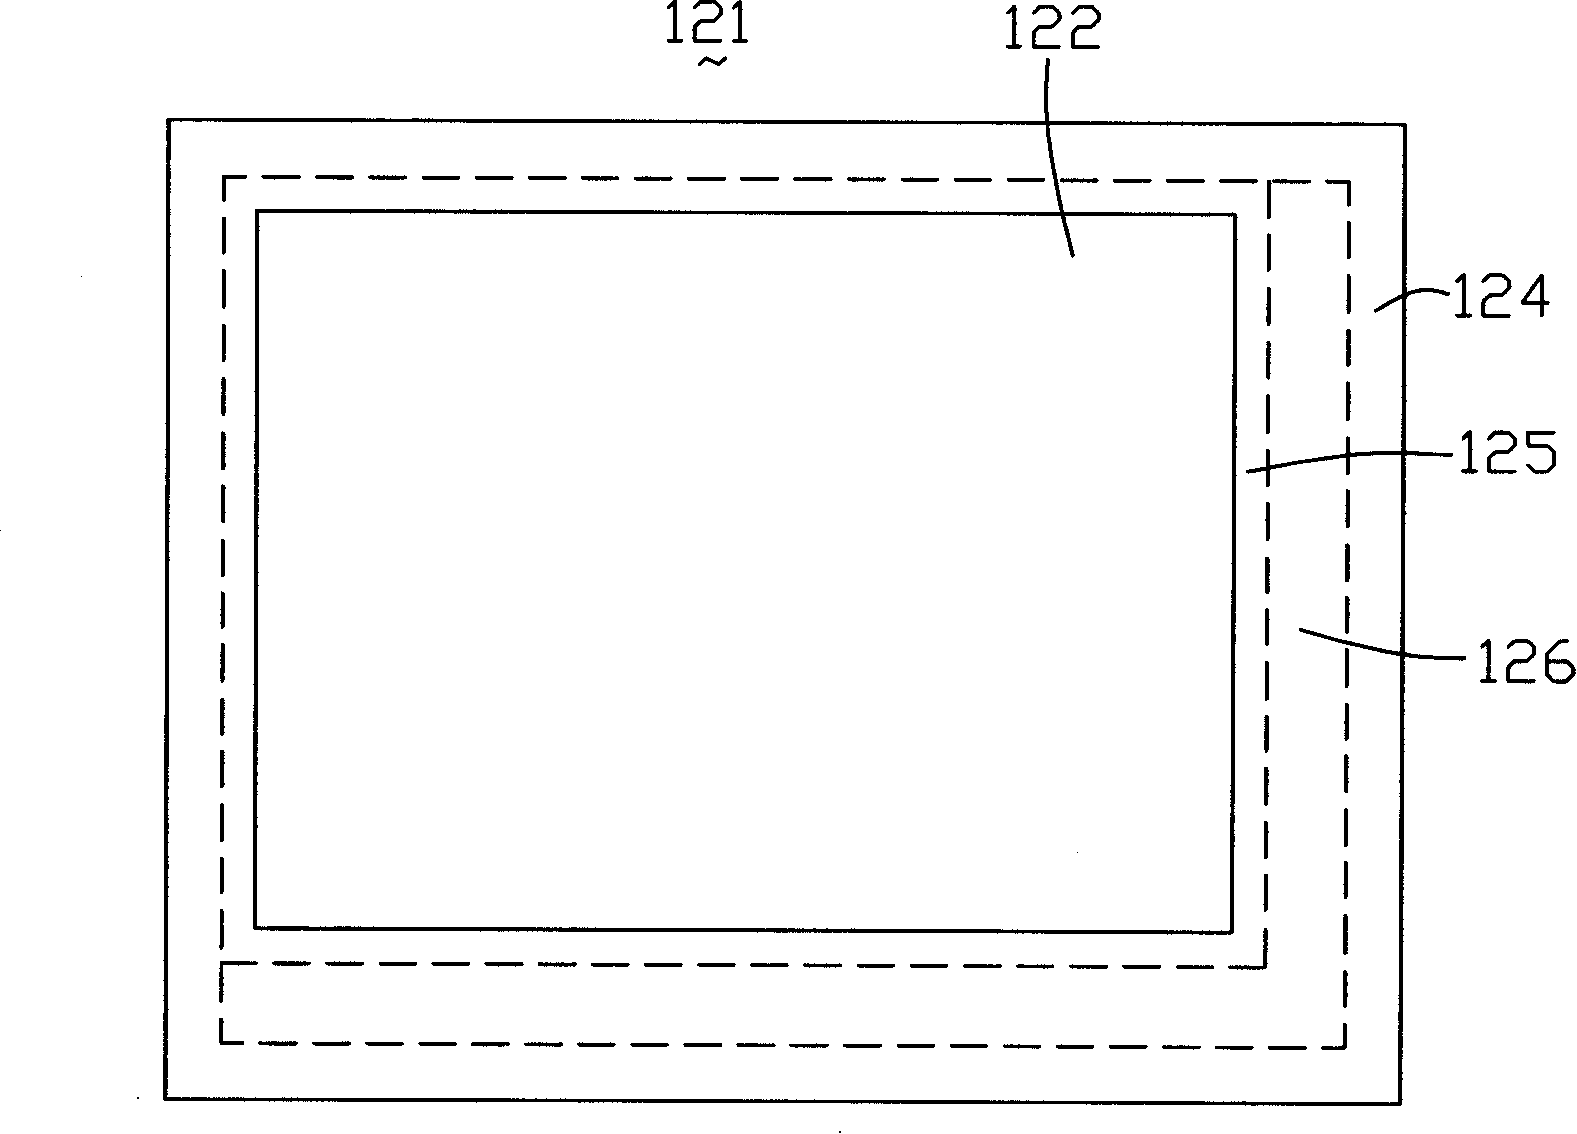 LCD panel preparation method